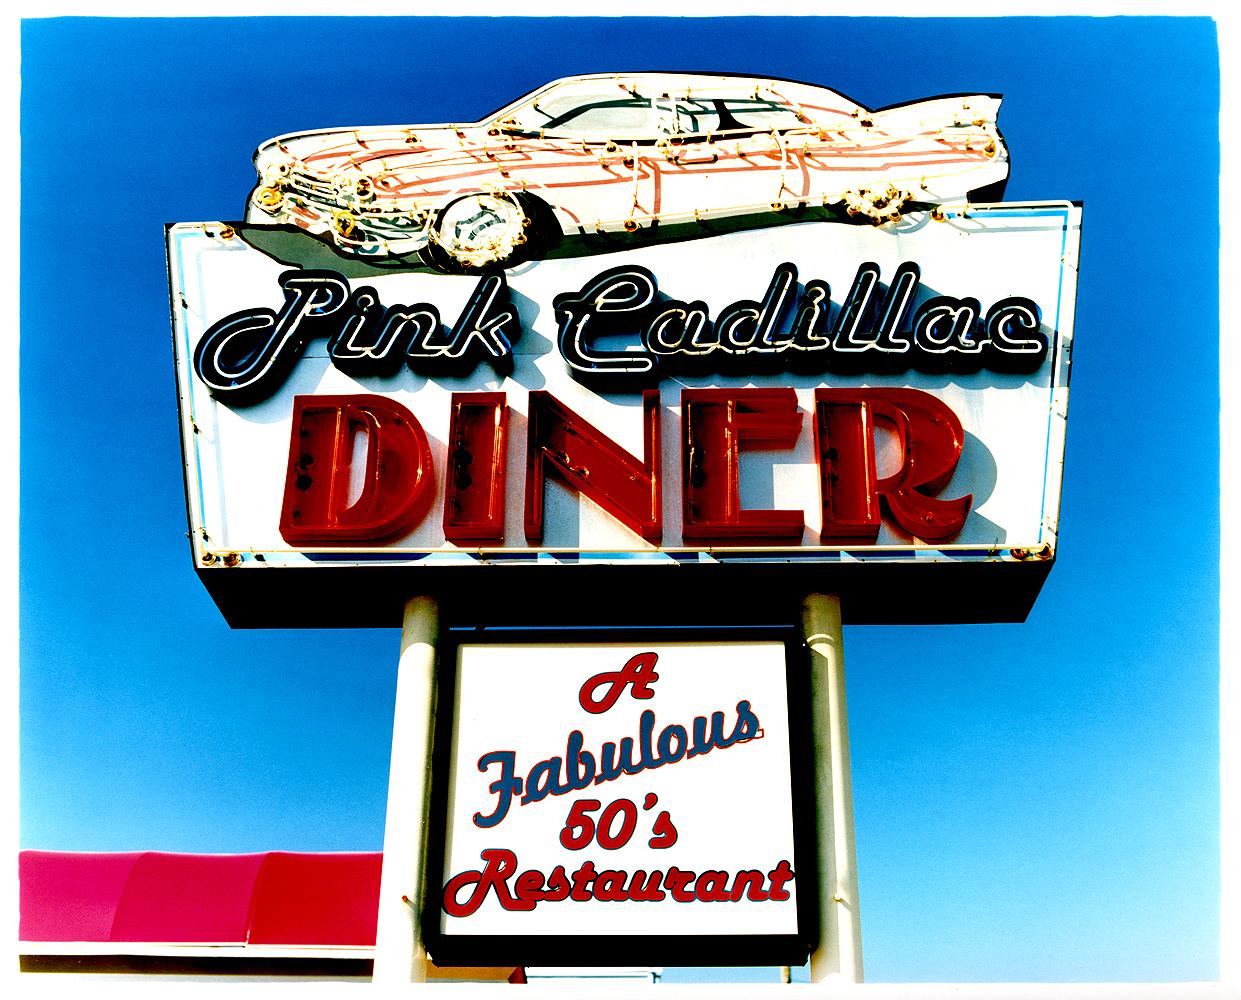 Richard Heeps Color Photograph - A Fabulous 50's Restaurant, Wildwood, New Jersey - Contemporary color photograph